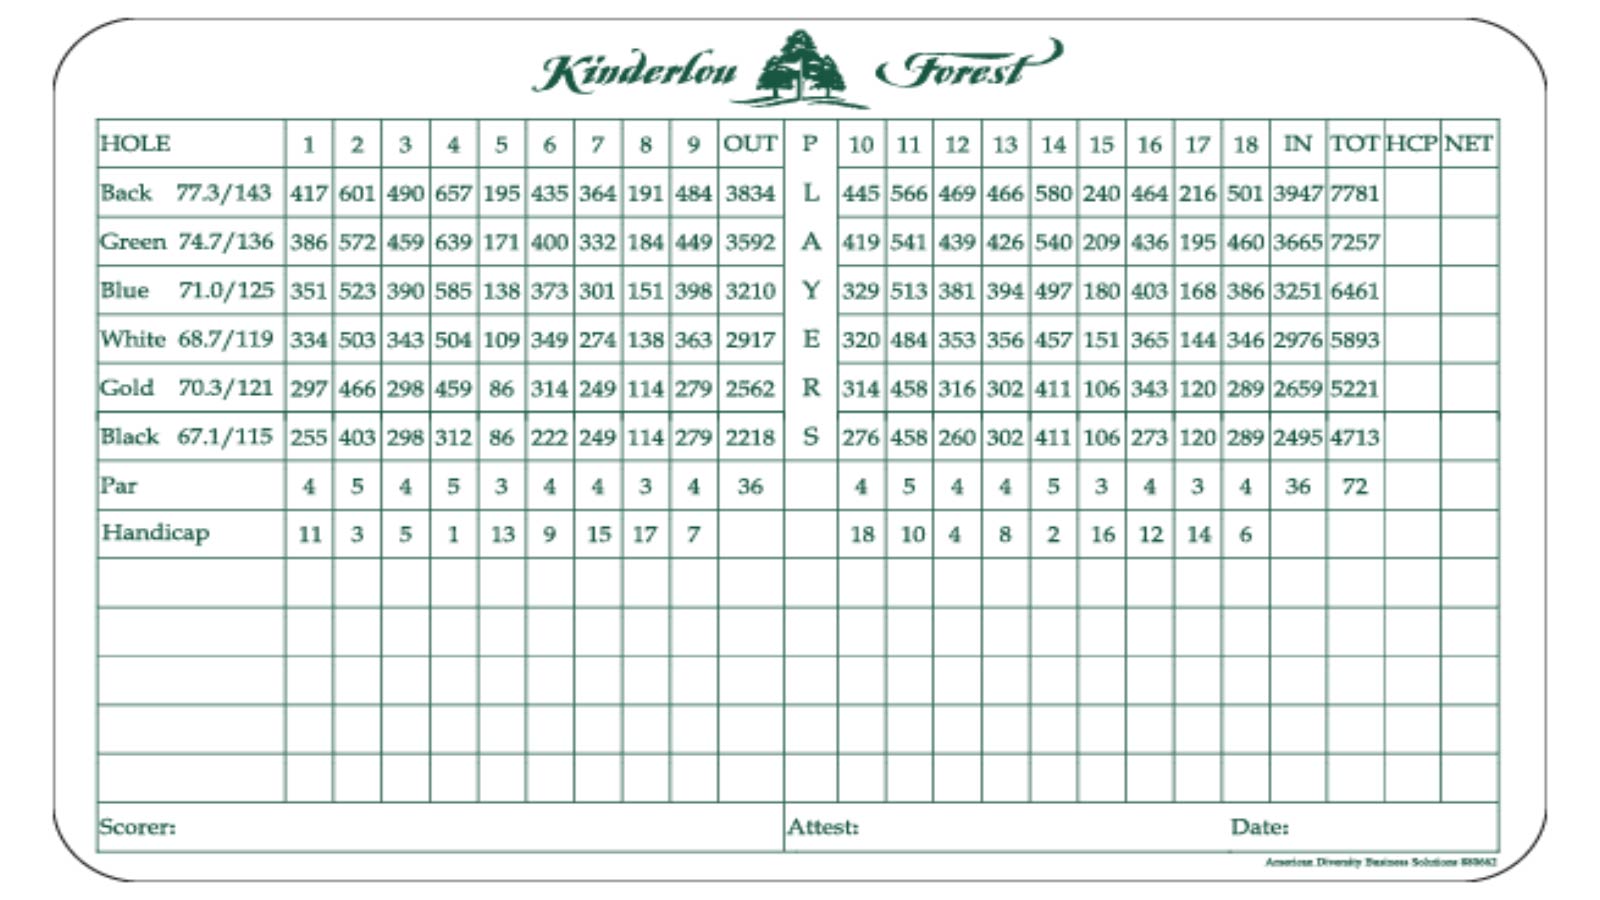 Kinderlou Forest Scorecard